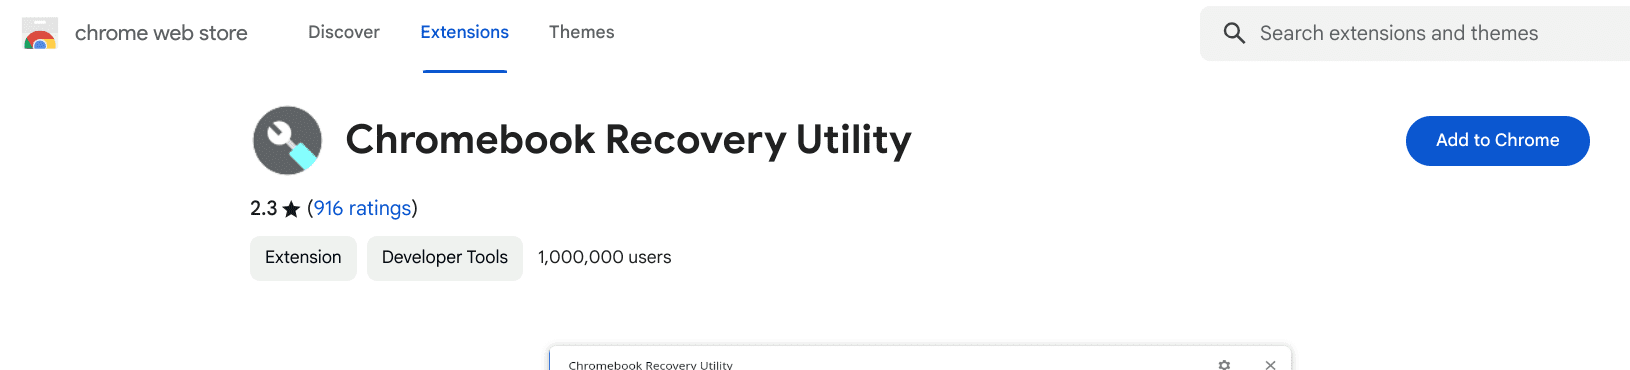 chrome web store chromebook recovery utility